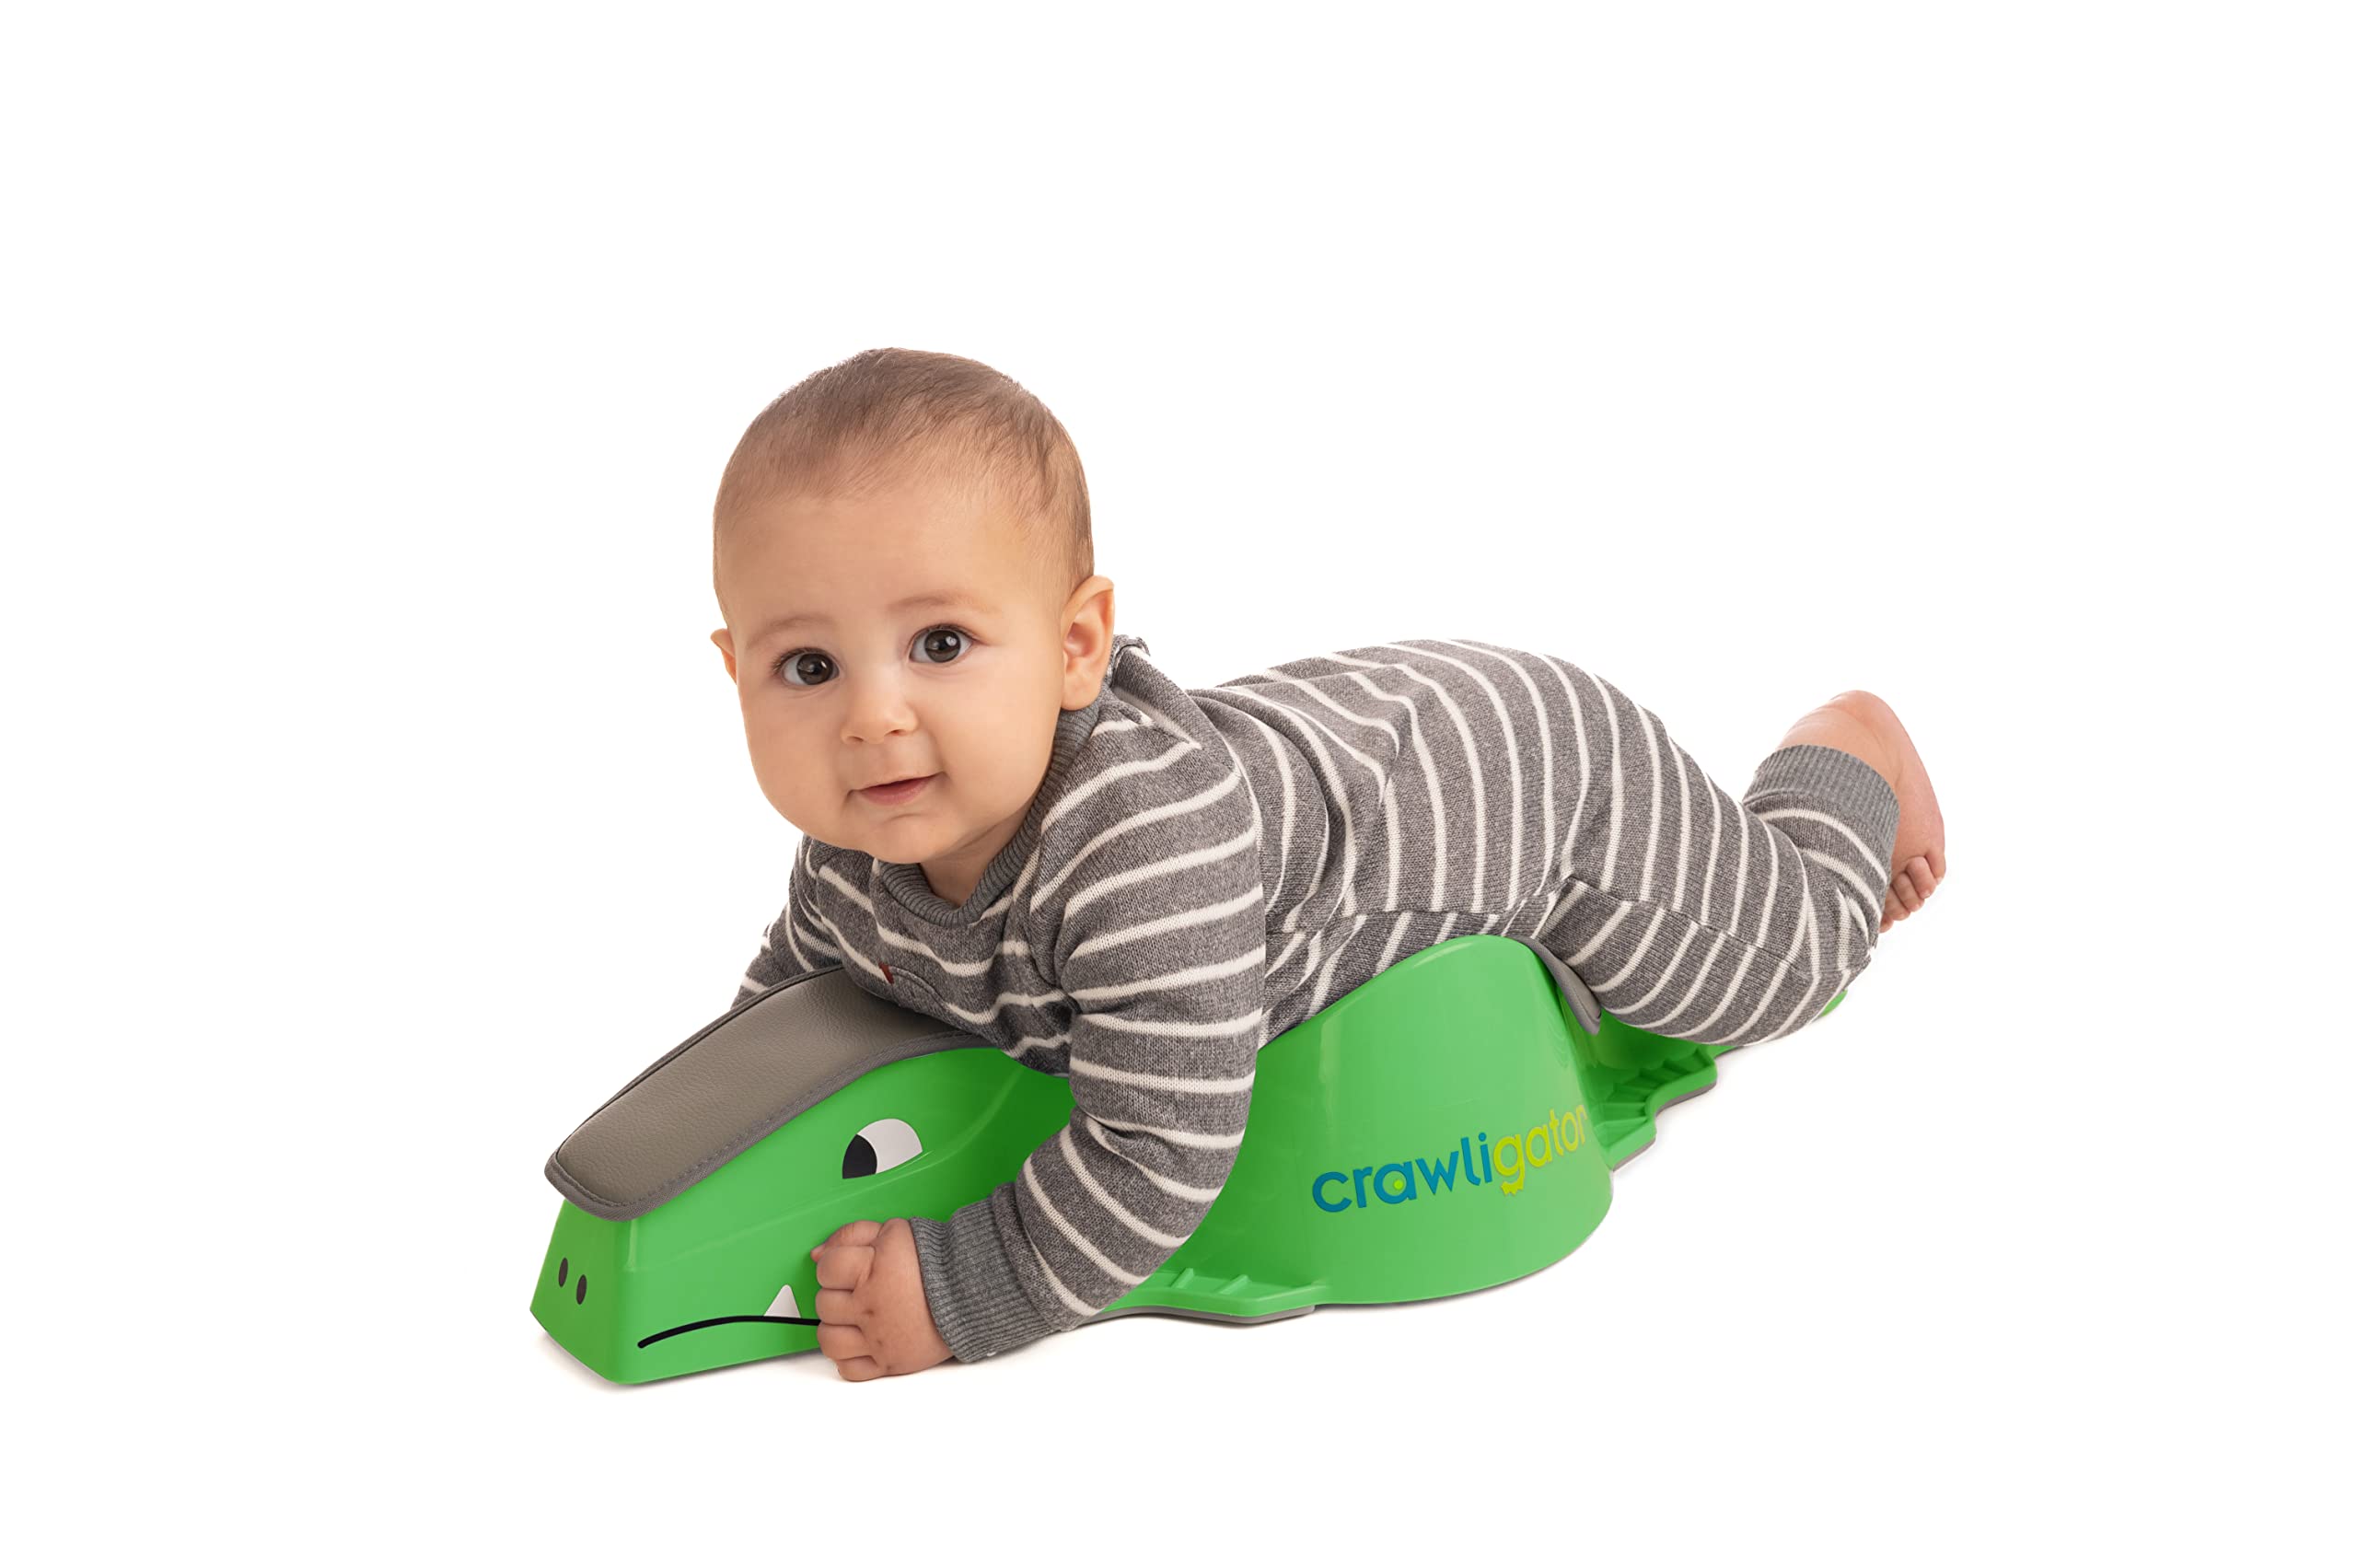 Crawligator Tummy Time Toy I Provides Mobility for Infants 4-12 Months I Early Childhood Educational I HSA/FSA Eligible